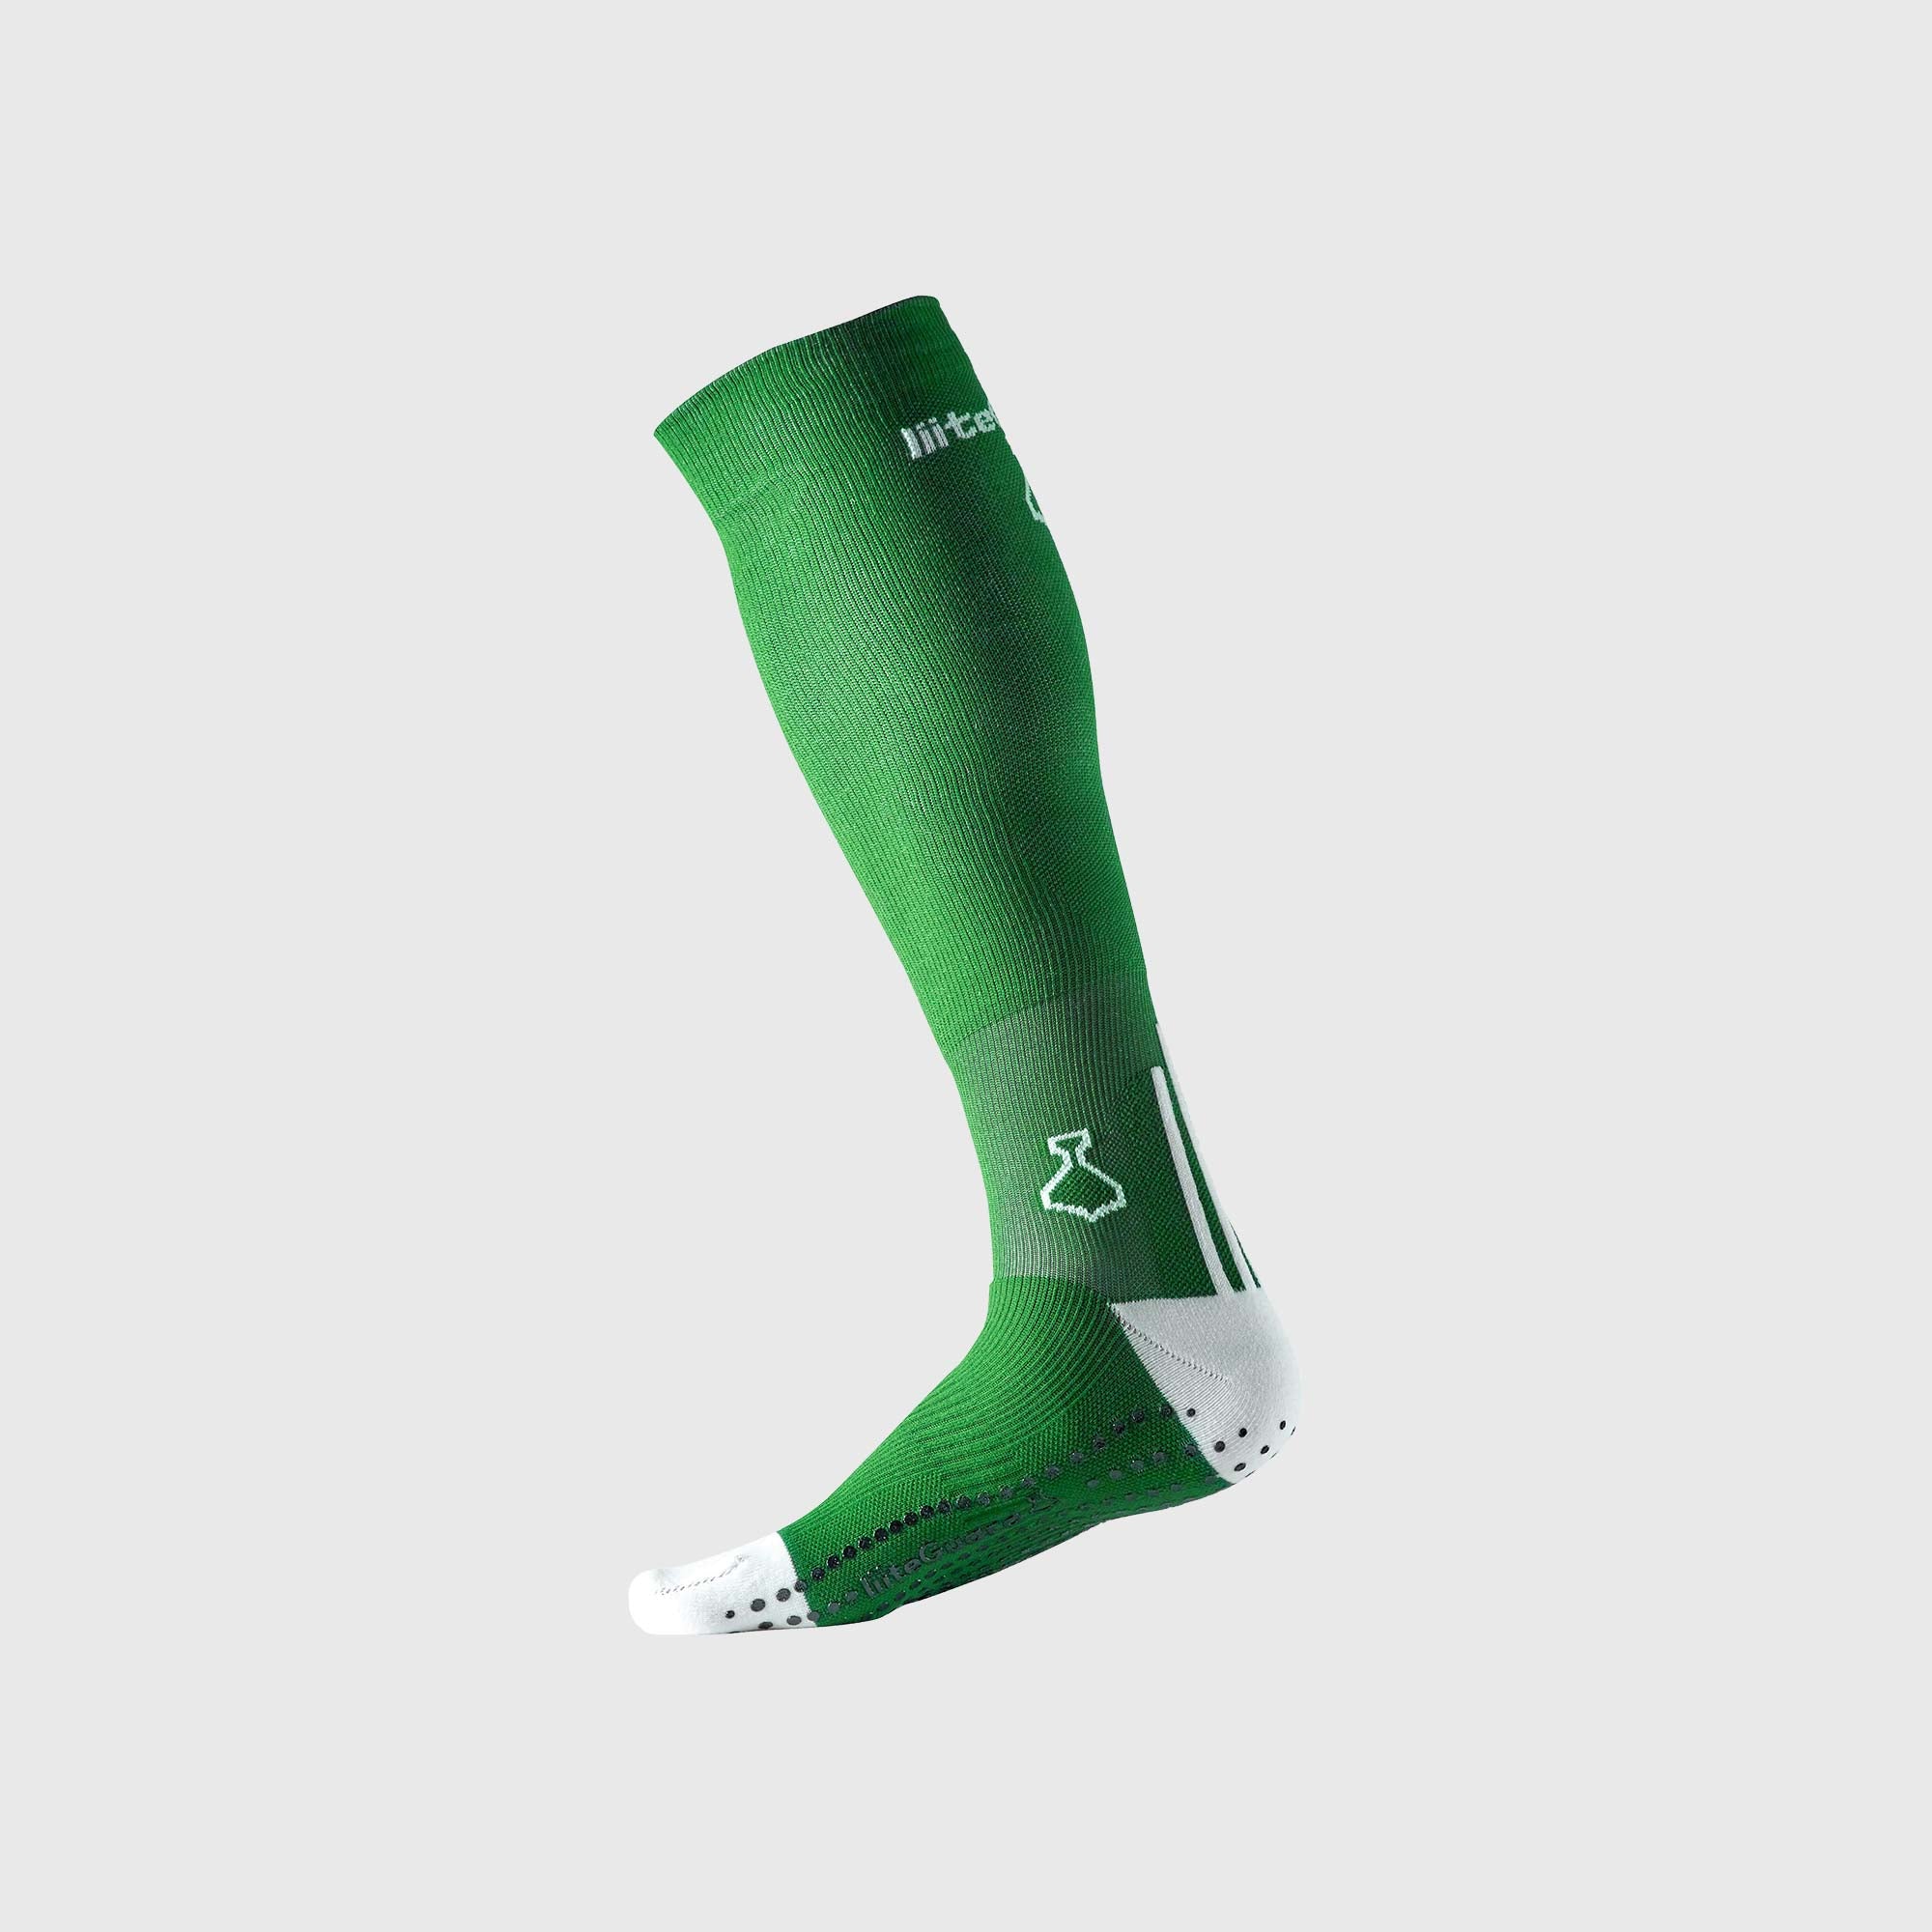 Liiteguard PERFORMANCE SOCK Long socks GREEN